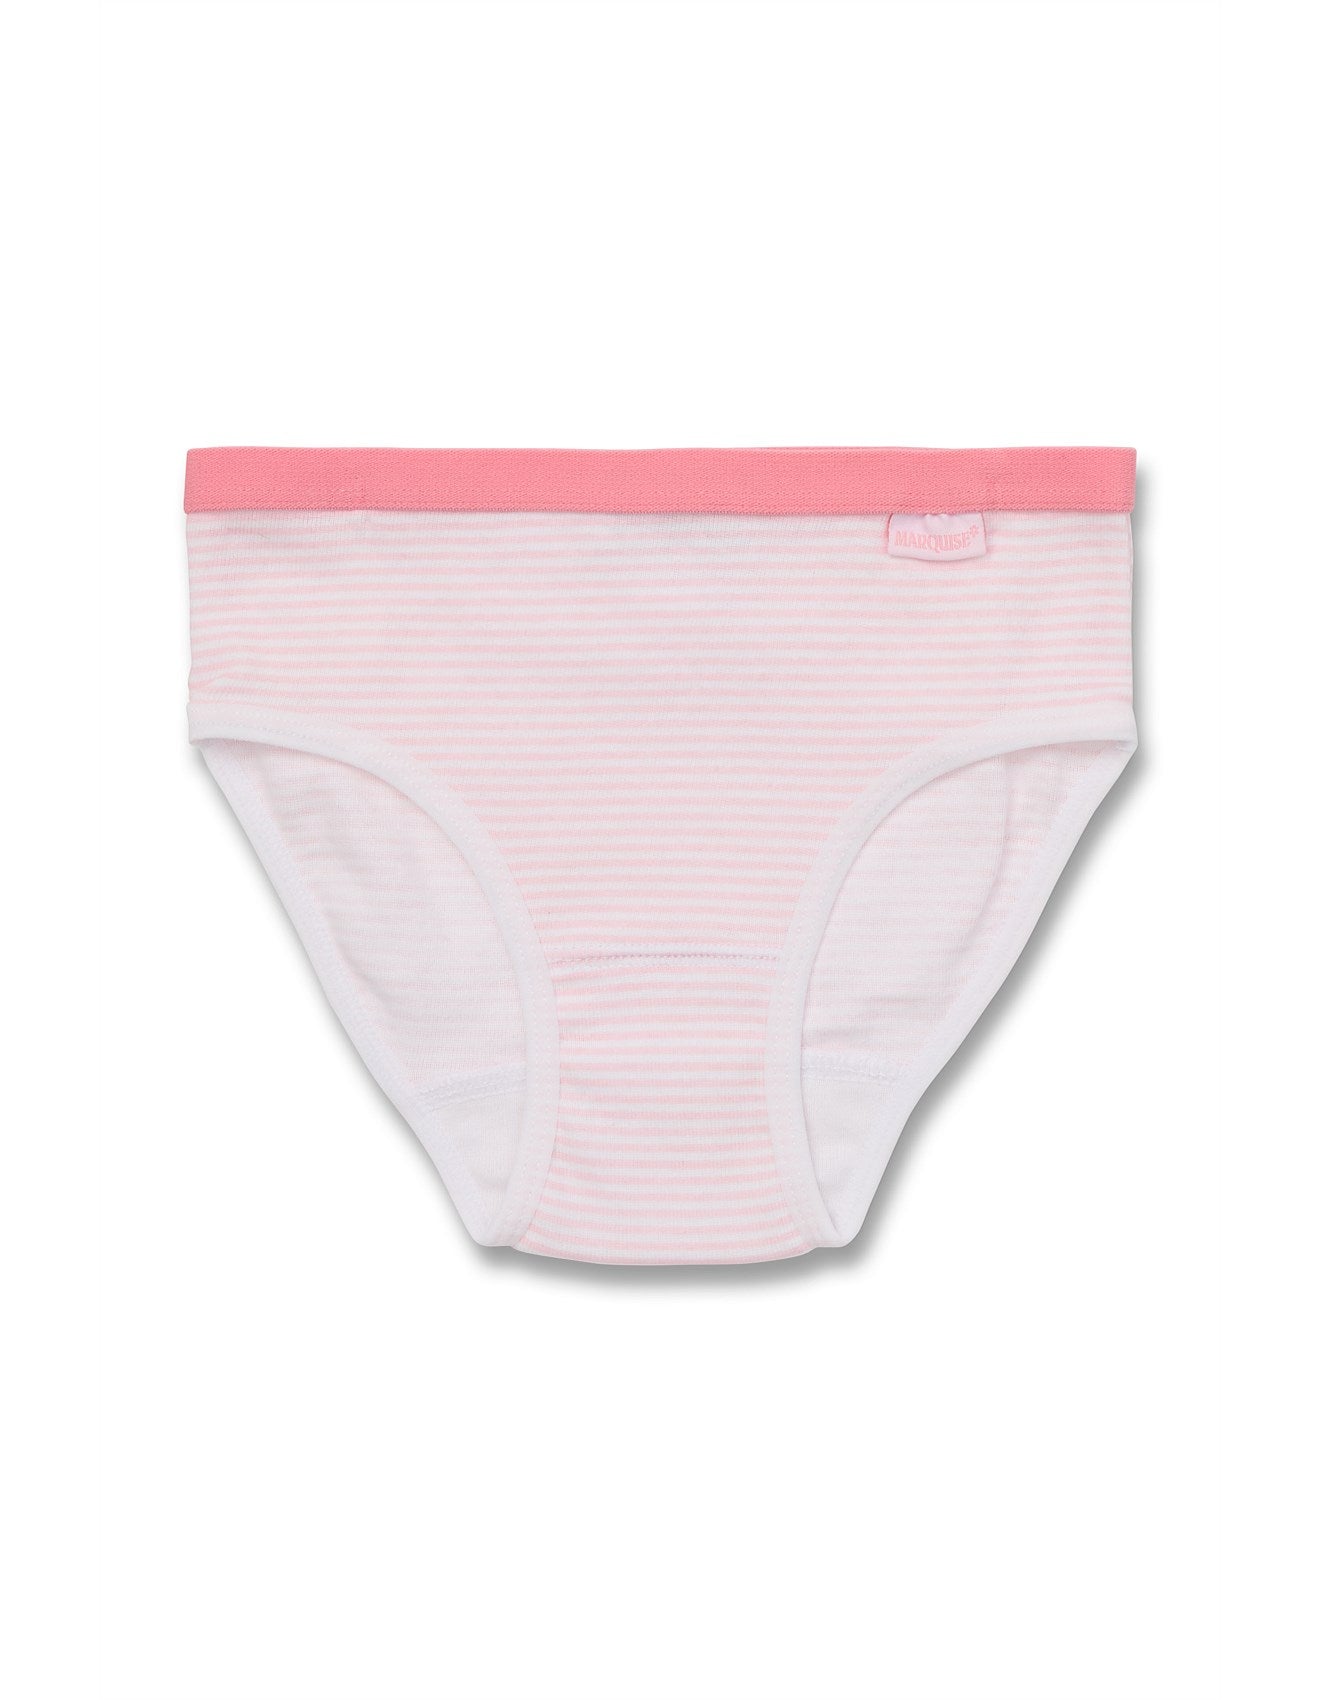 Marquise Girls Underwear - 3 Pack Pink Assorted